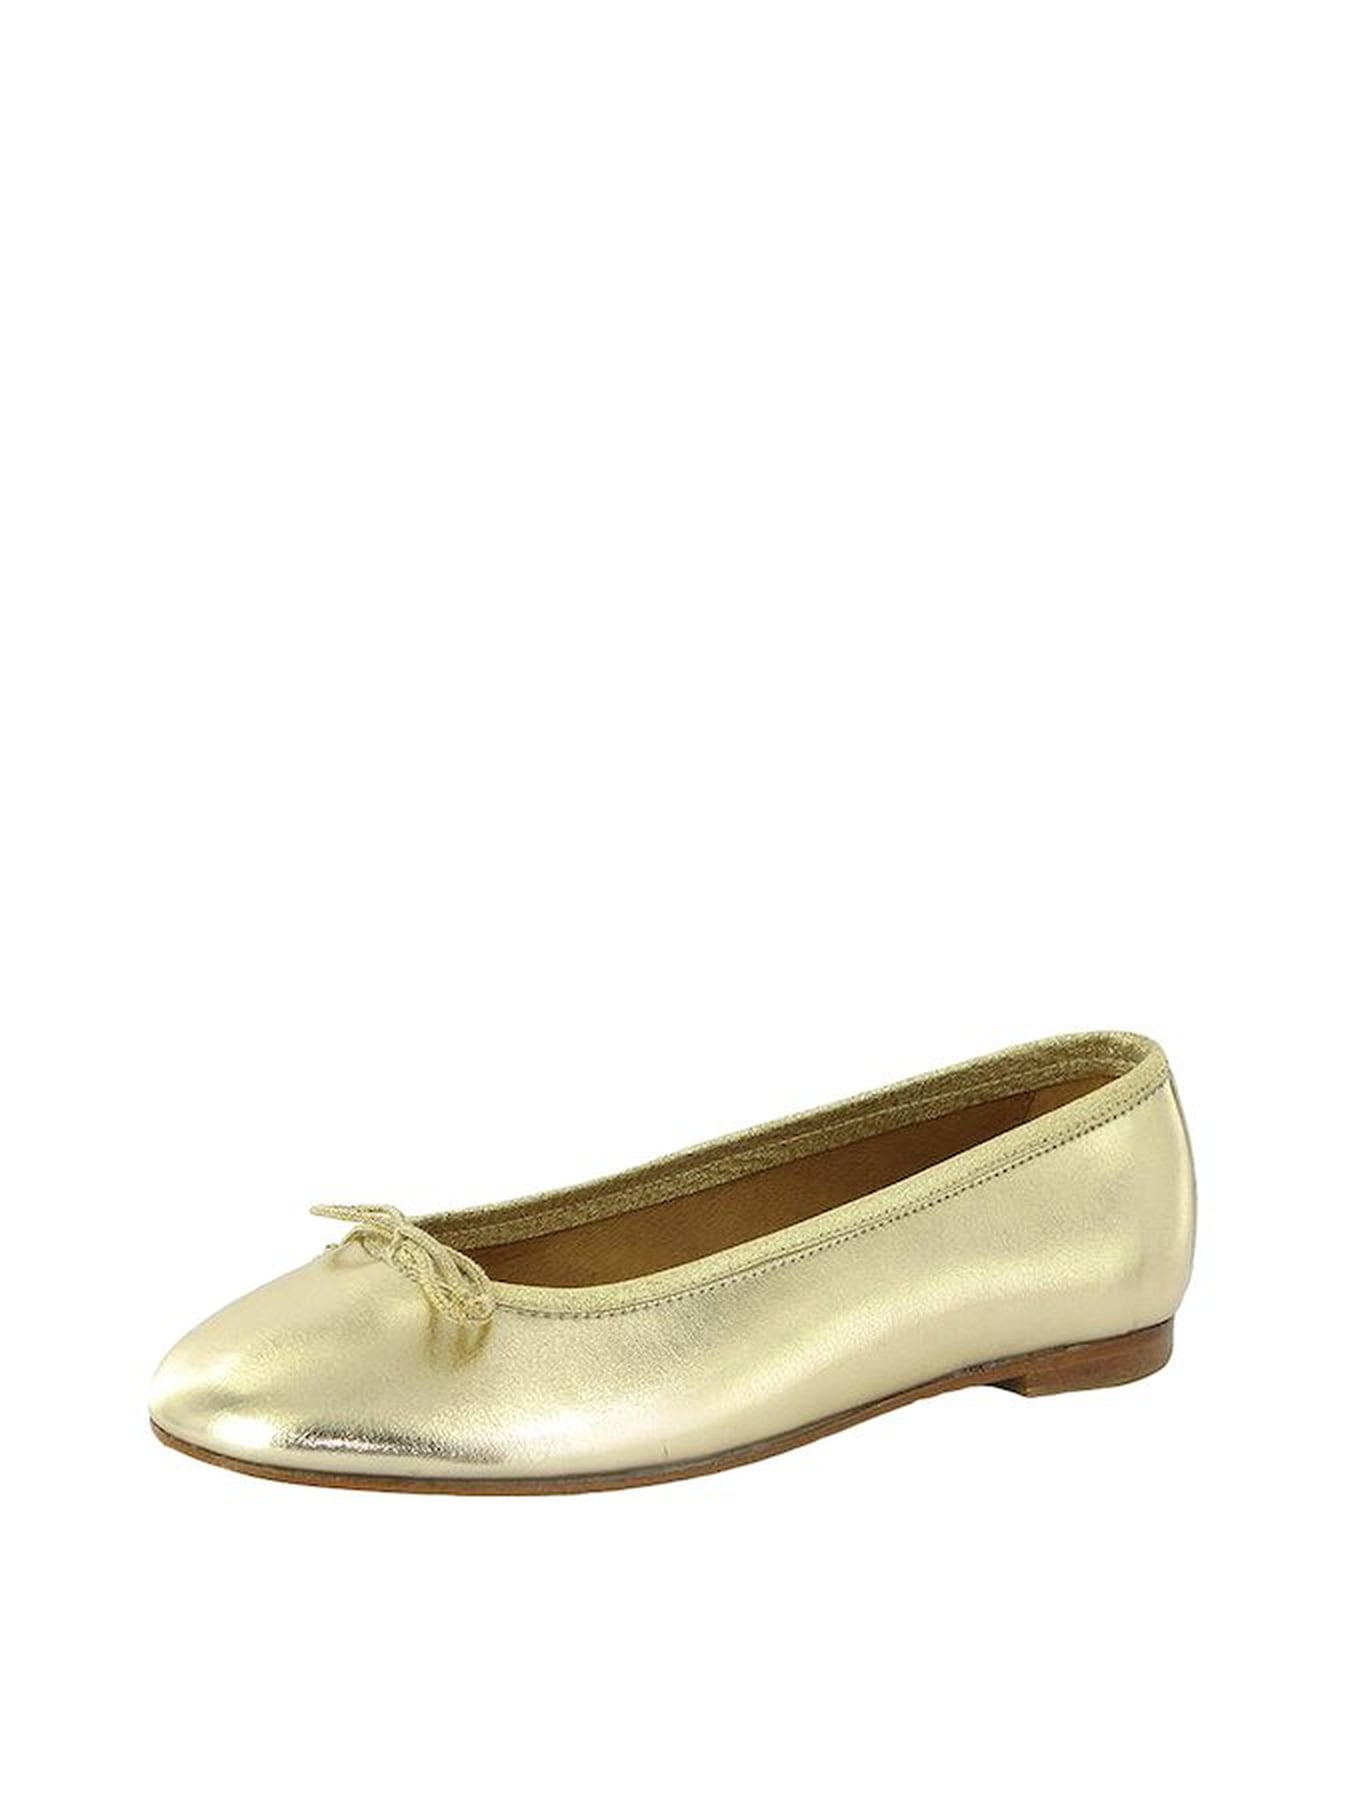 Pippa Middleton Gold Flats | POPSUGAR Fashion